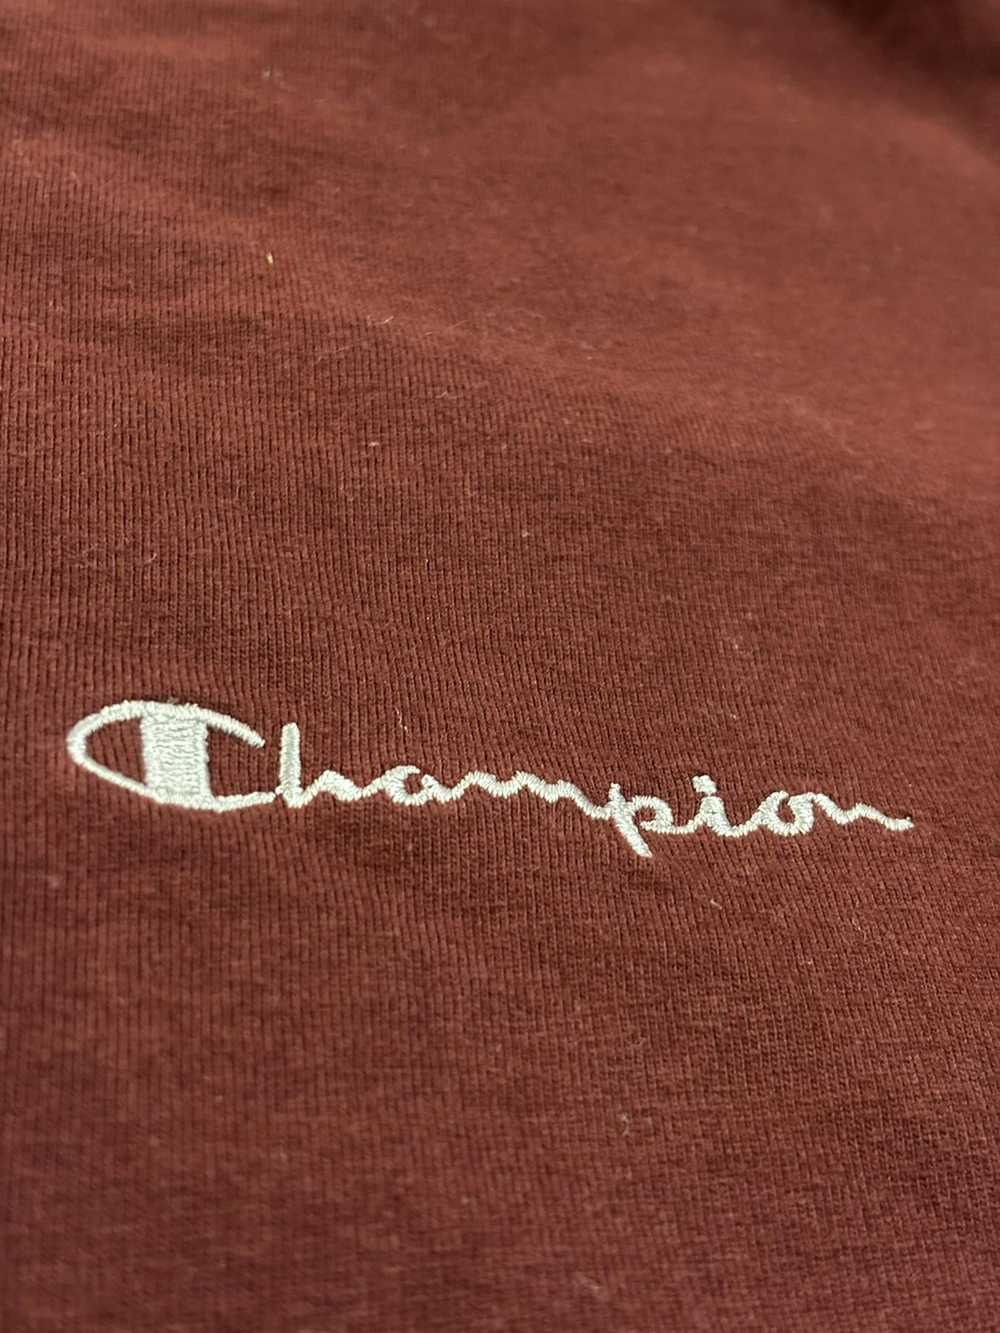 Champion Champion Script tee - image 2